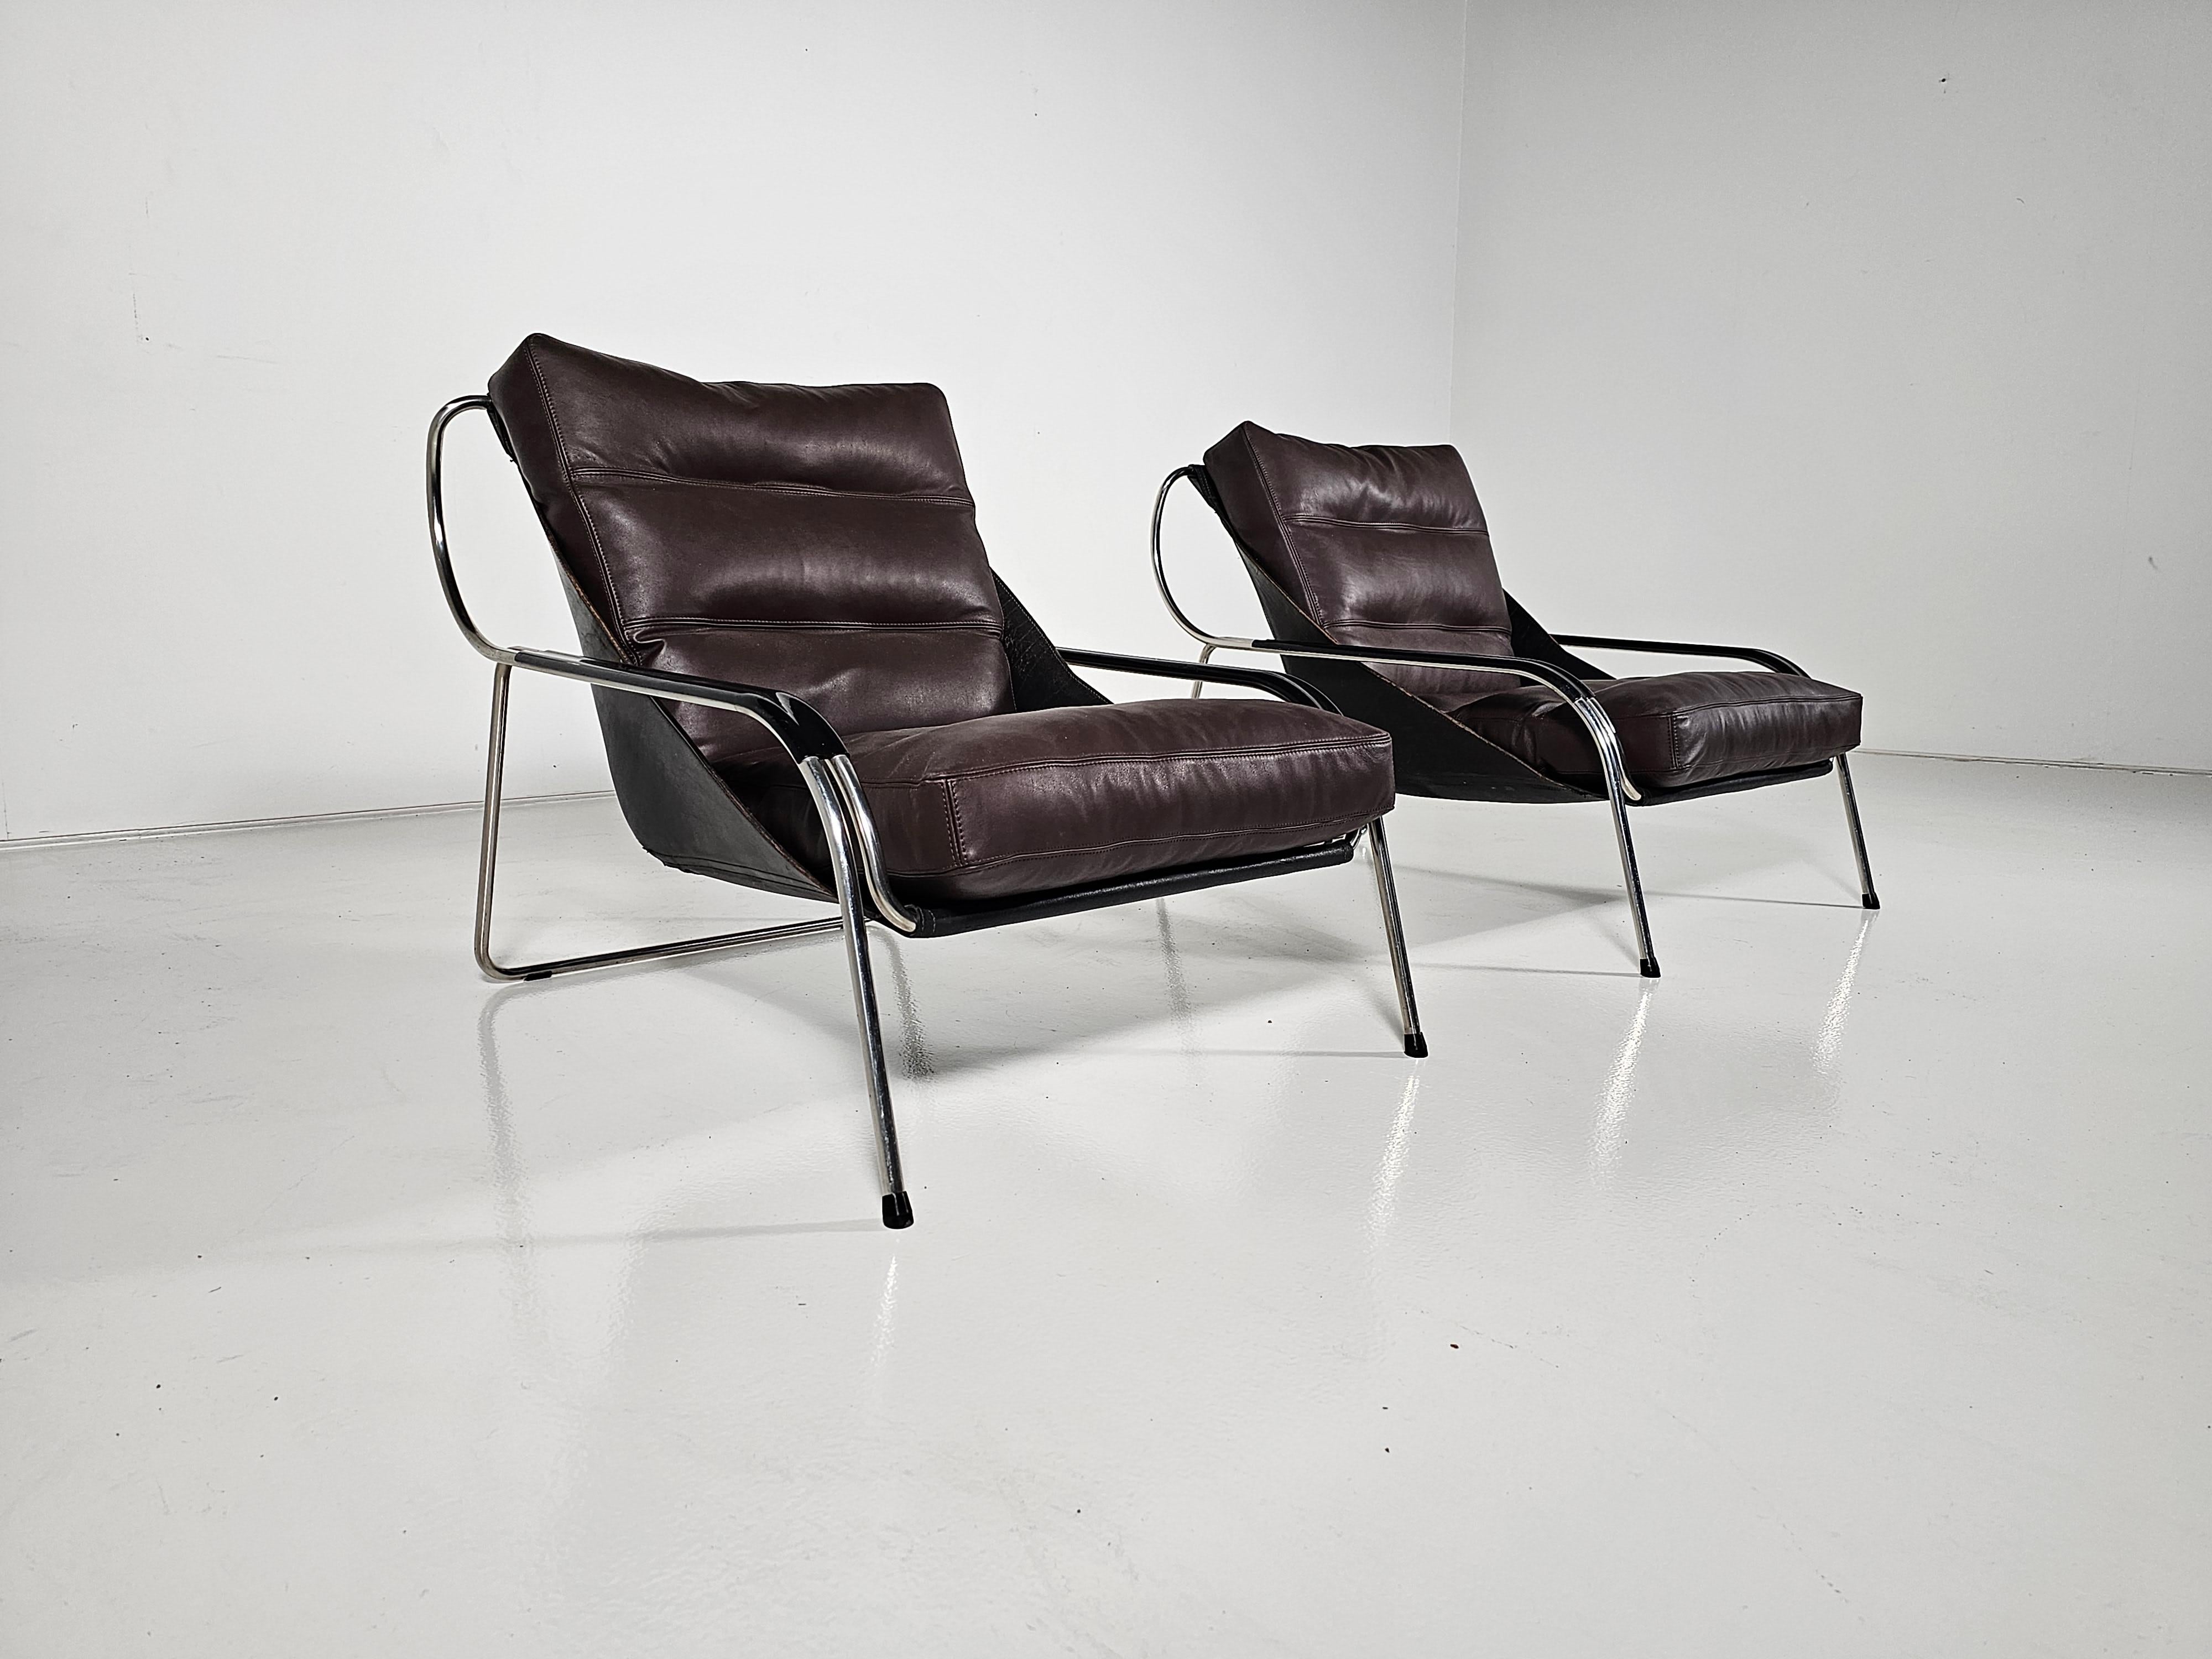 Steel  Marco Zanuso Maggiolina lounge chairs in brown and black leather, Zanotta, 1950 For Sale